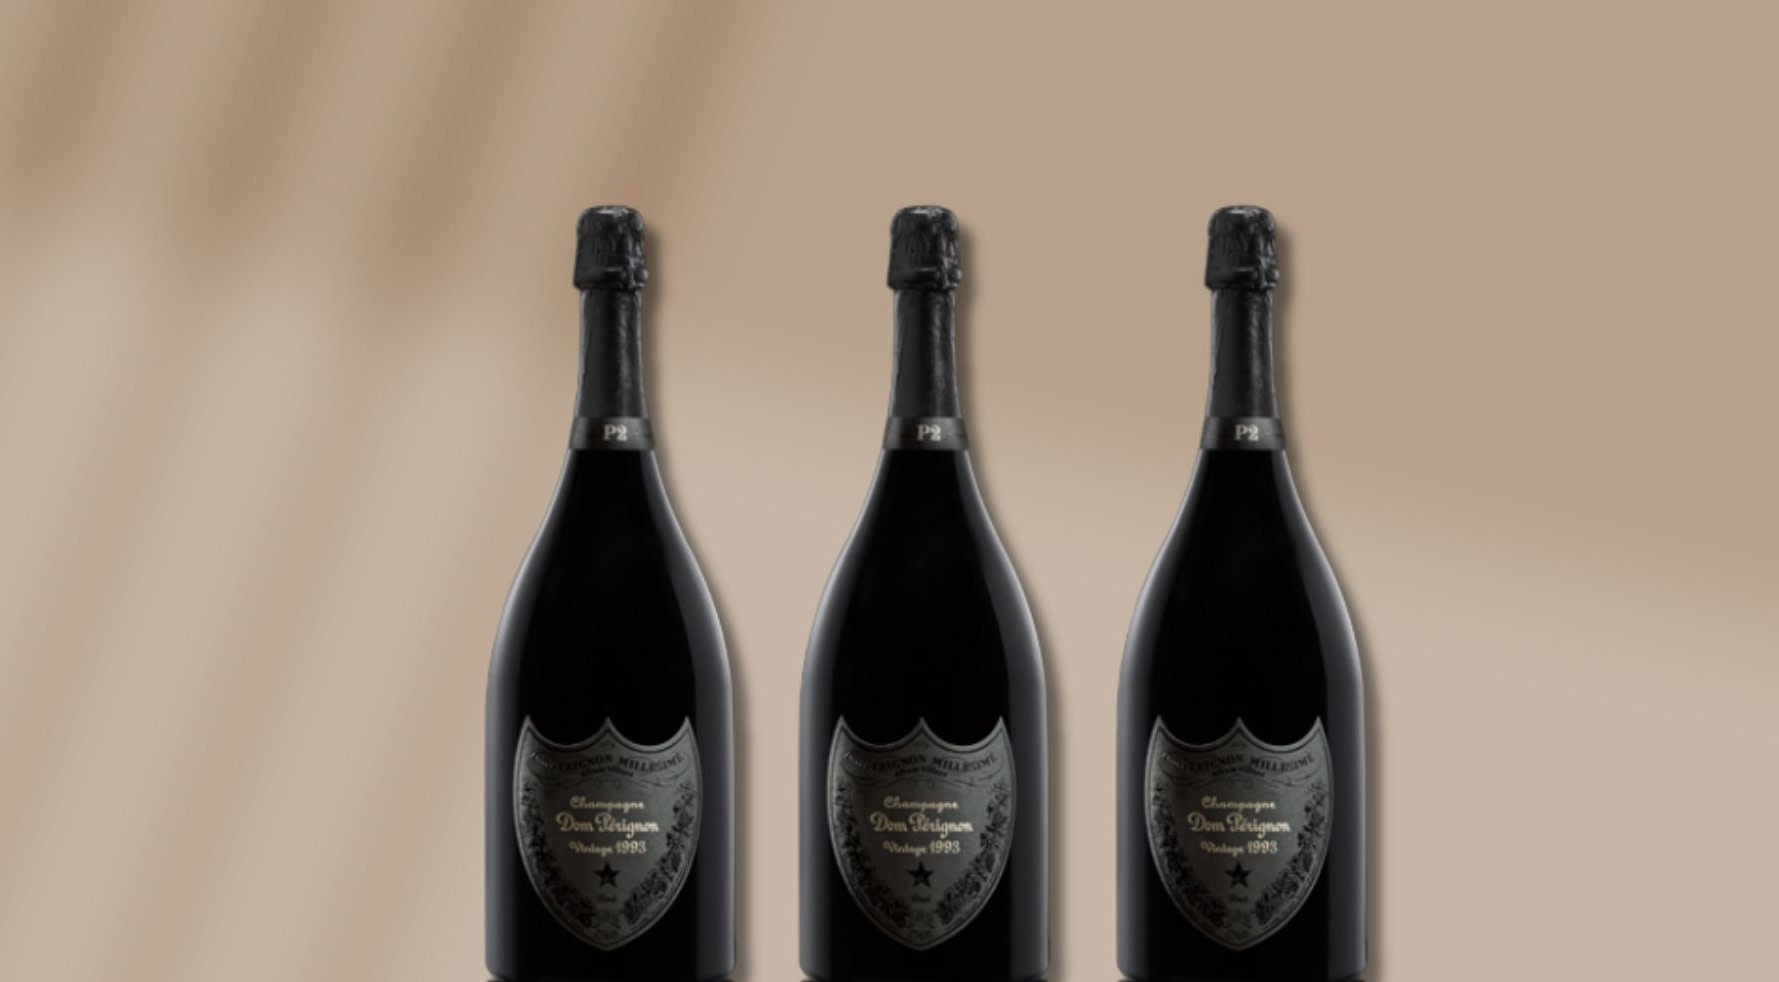 DOM PERIGNON Vintage Brut 2013 luminous label champagne – Prike